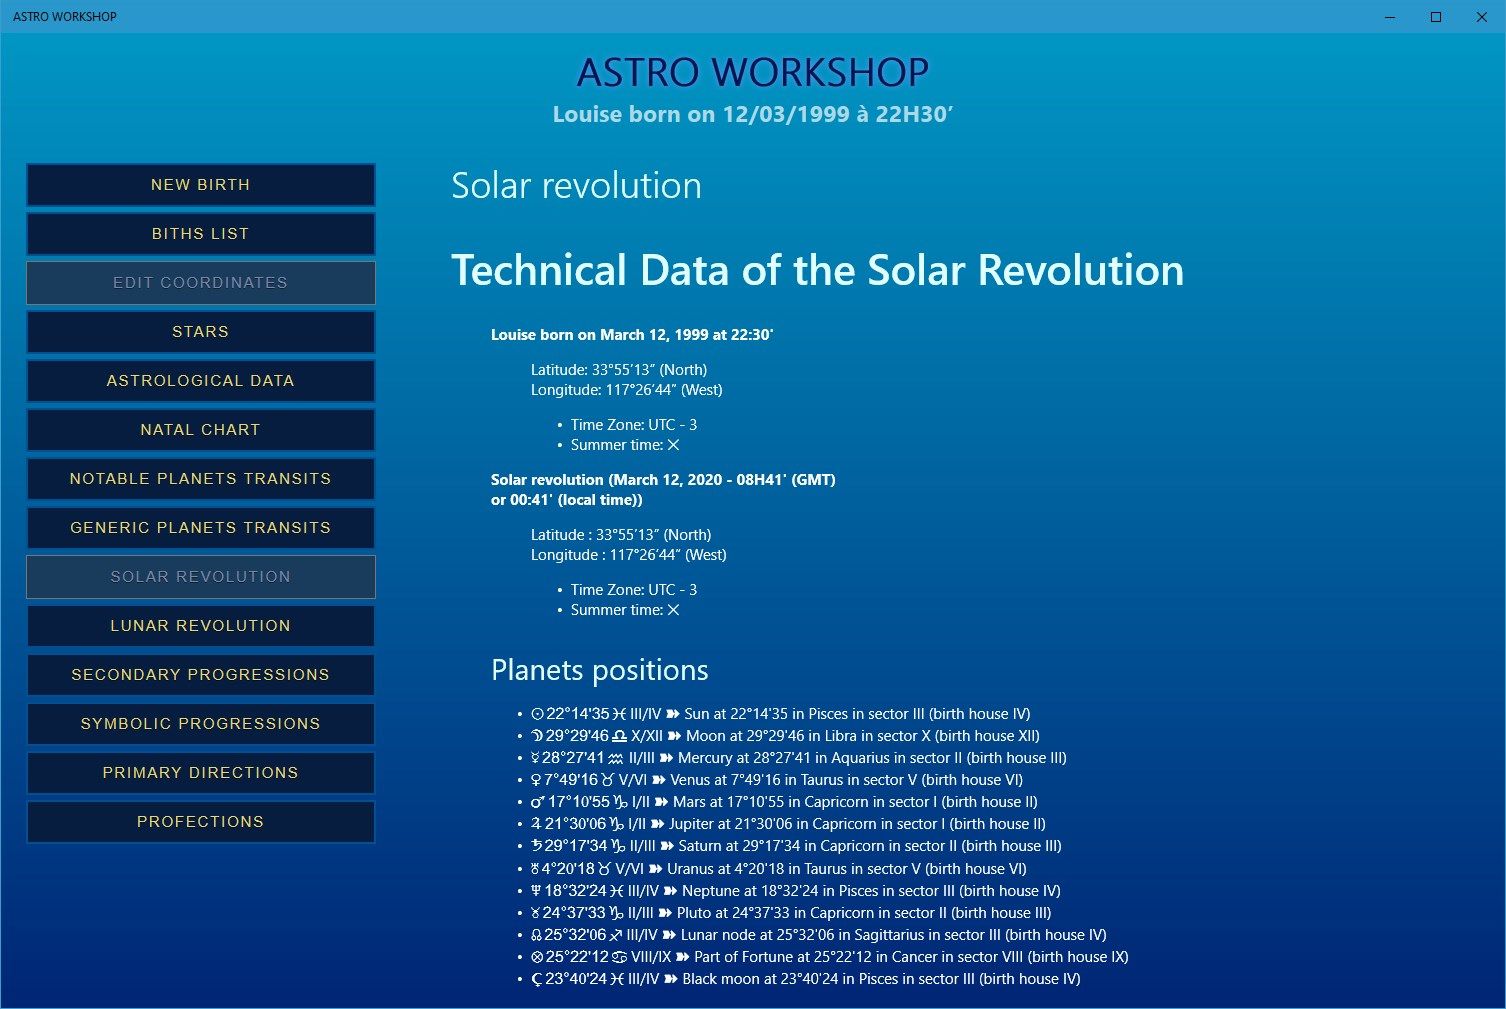 Solar revolution details (part)